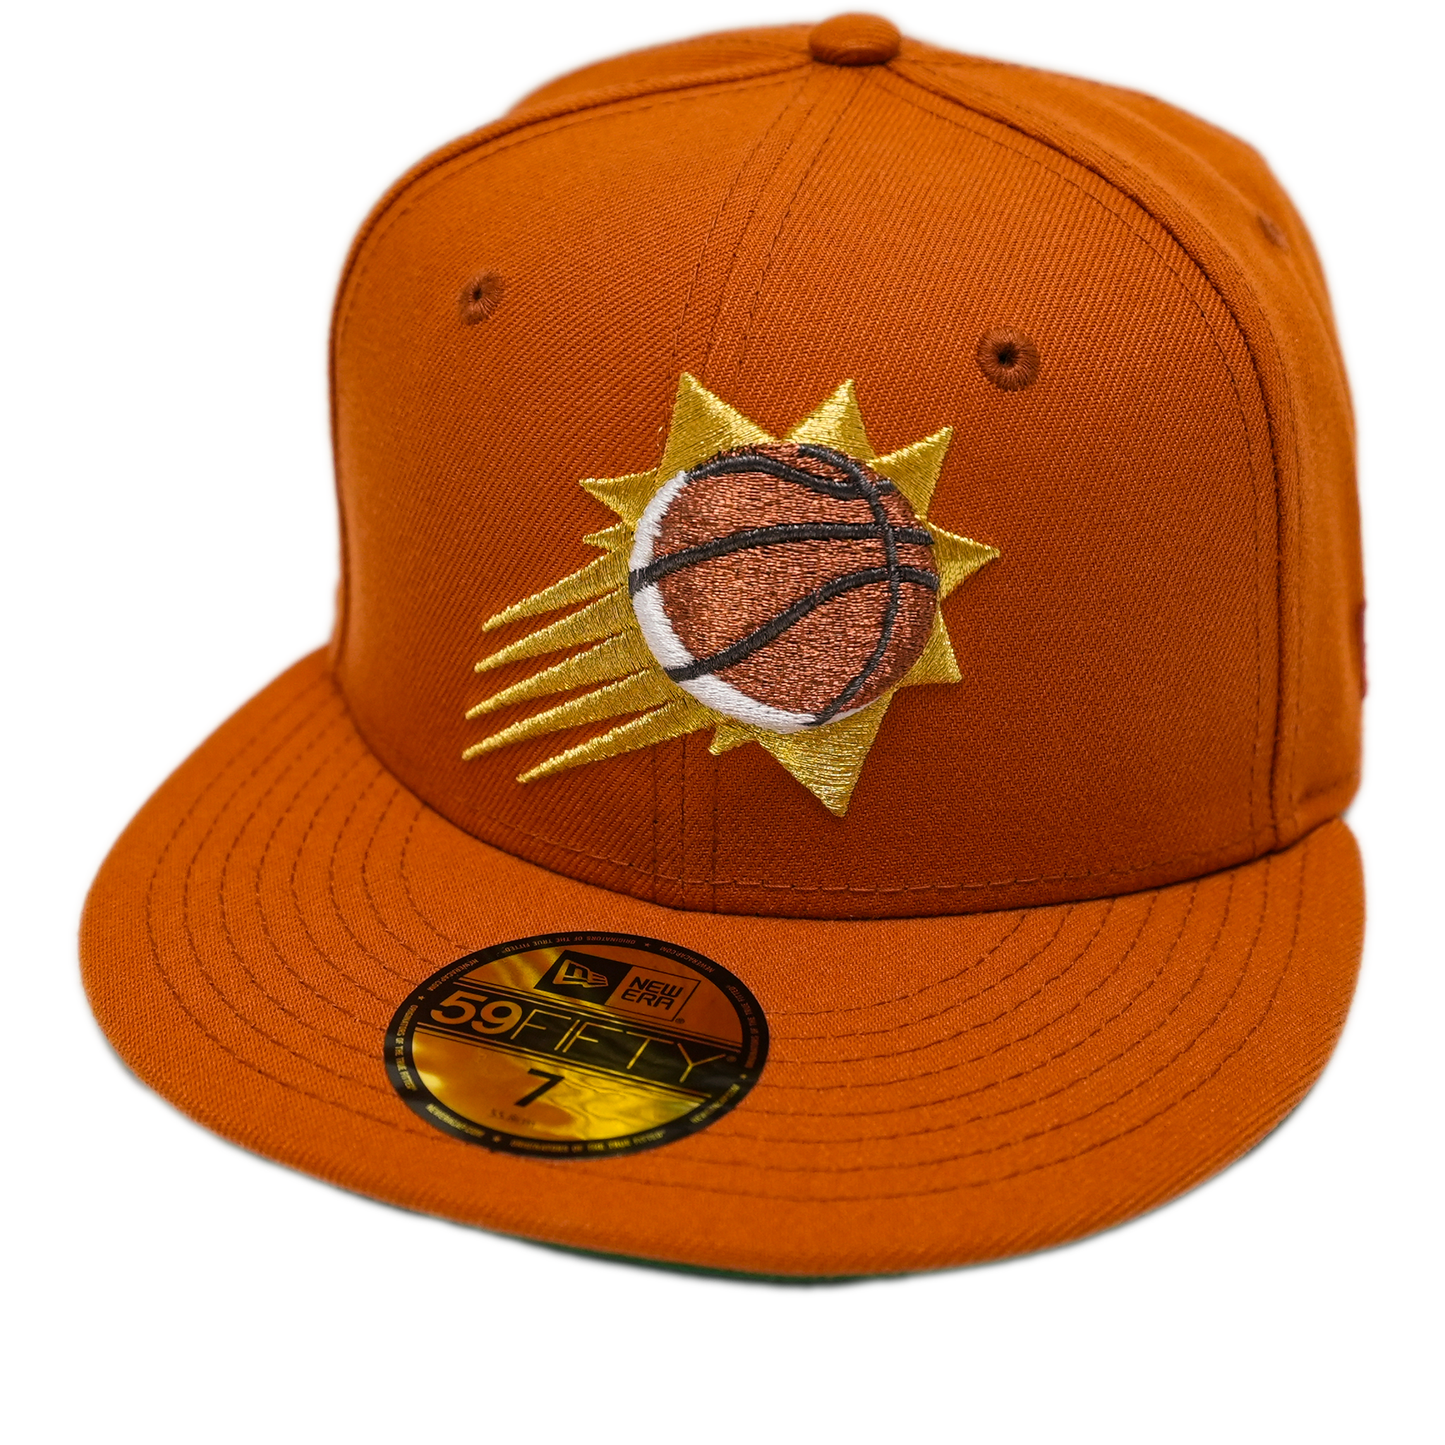 New Era Phoenix Suns 59Fifty Fitted Hat - Orange